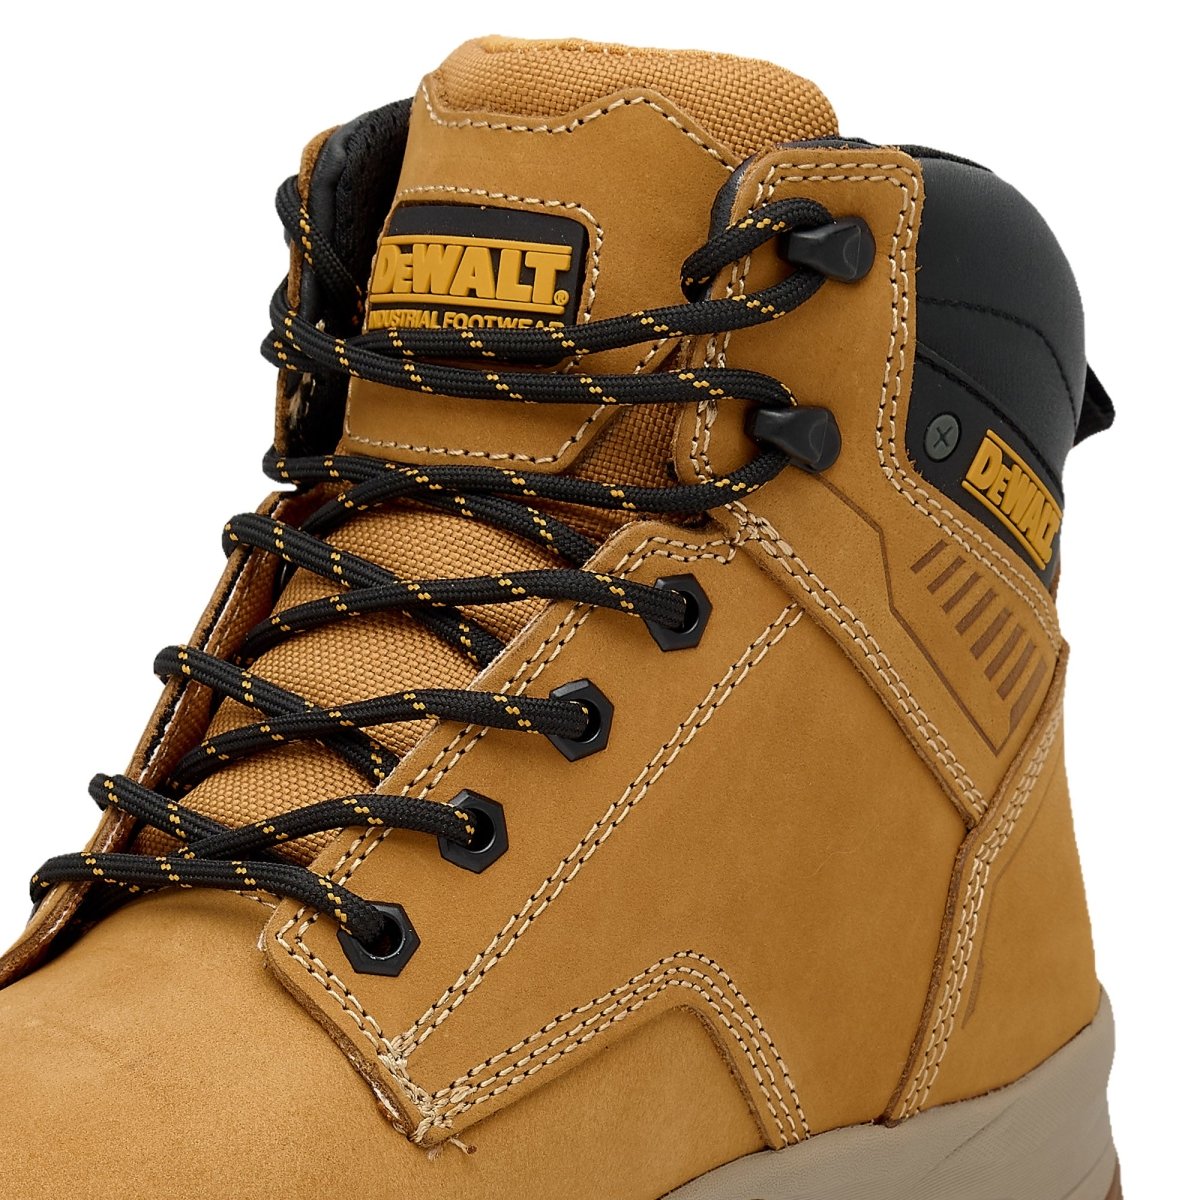 DeWalt Cranson Mens Nubuck Steel Toe Safety Boots - Shuzes